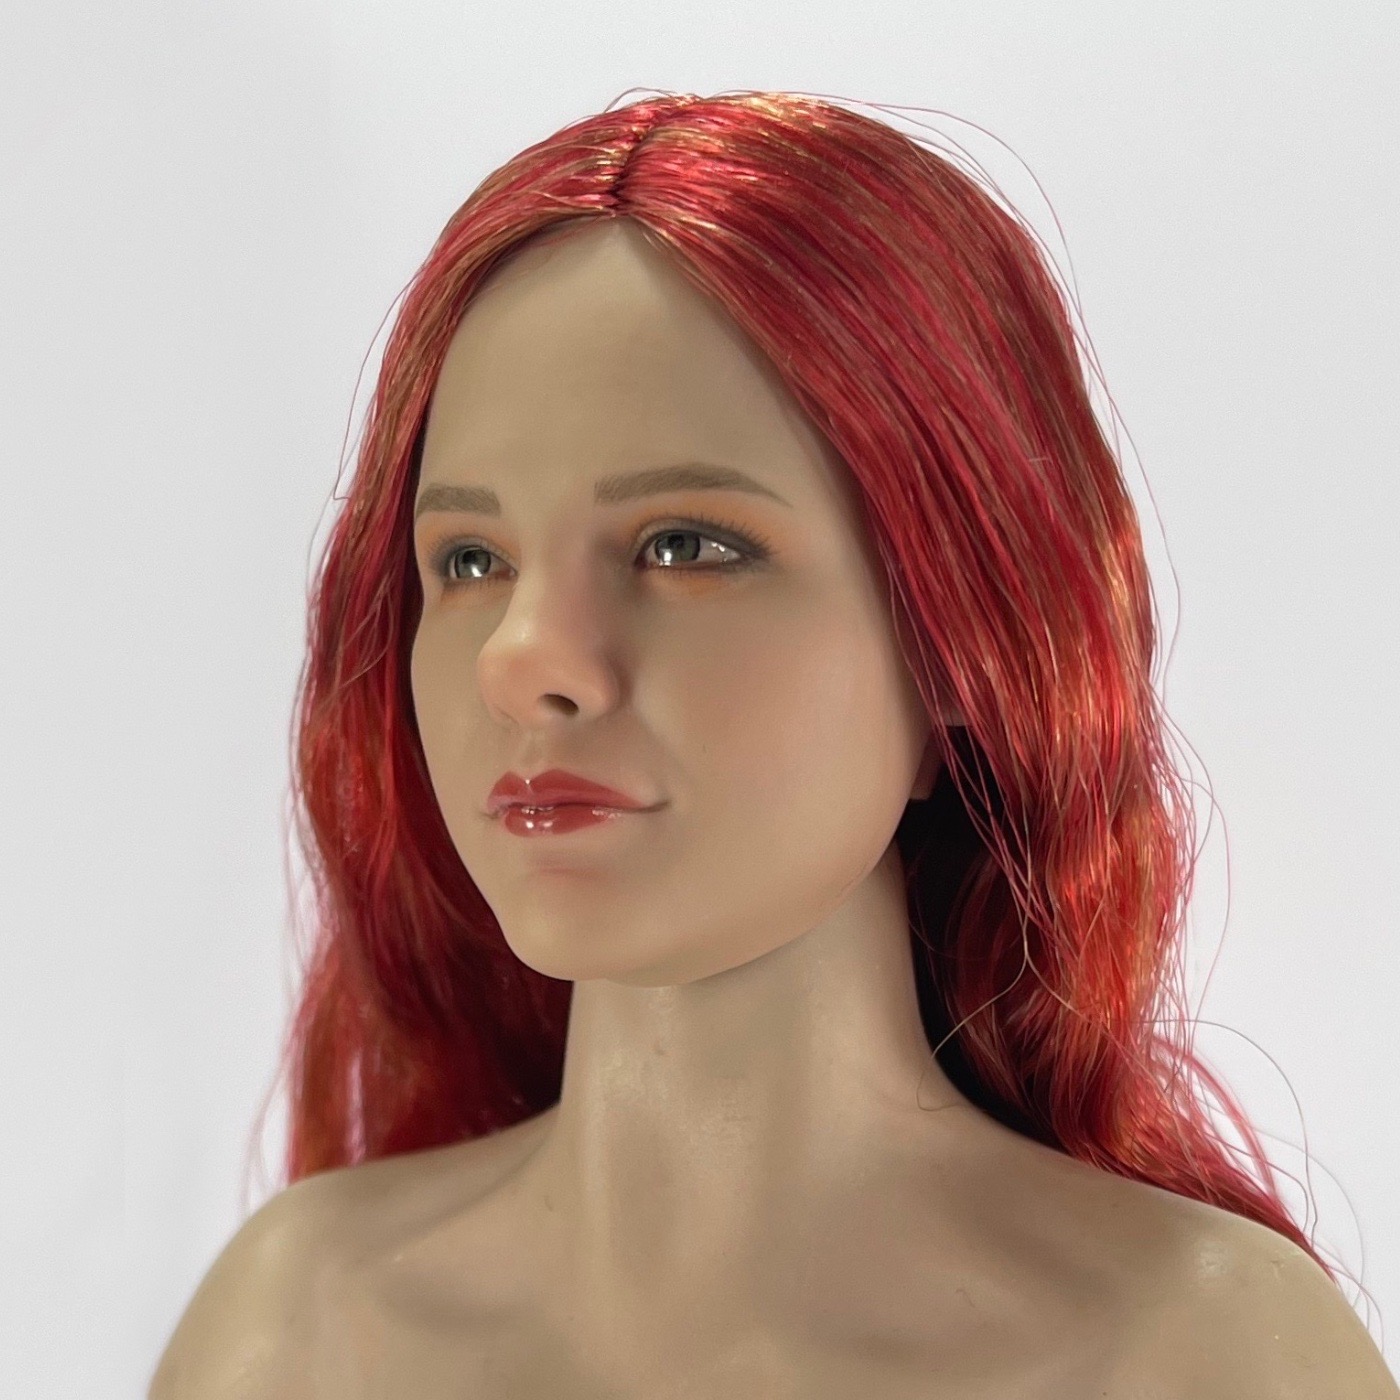 headsculpt - NEW PRODUCT: SUPER DUCK SDH036 1/6 Scale Female head sculpt in 4 styles 52860116643_3d0fe88b7d_o